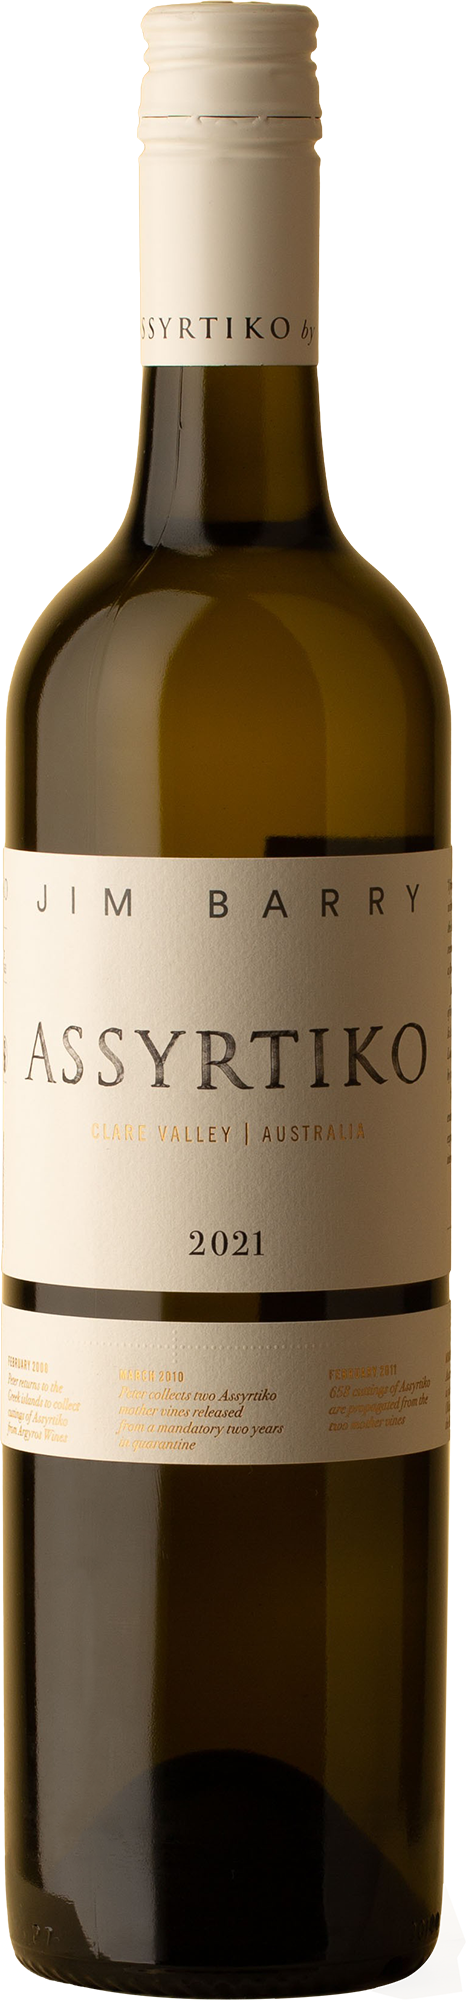 Jim Barry - Assyrtiko 2021 White Wine